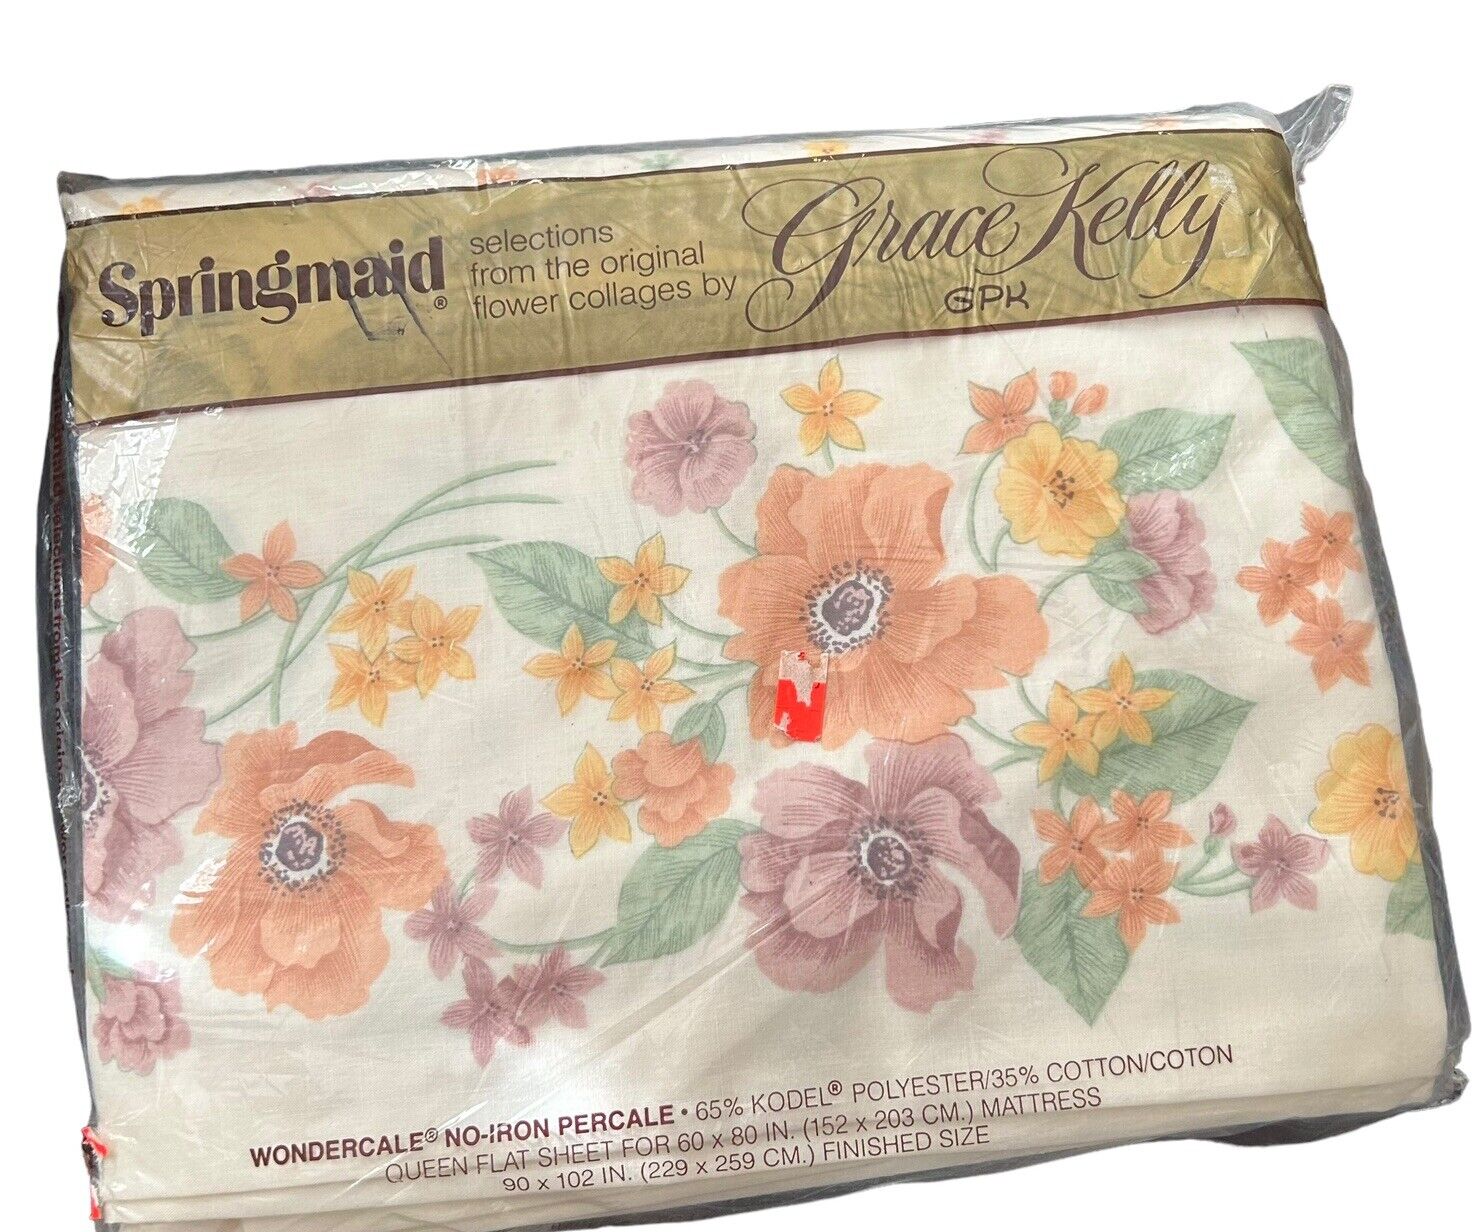 Vtg Springmaid Queen Flat Sheet Festival Grace Kelly Wondercale Non Iron Percale